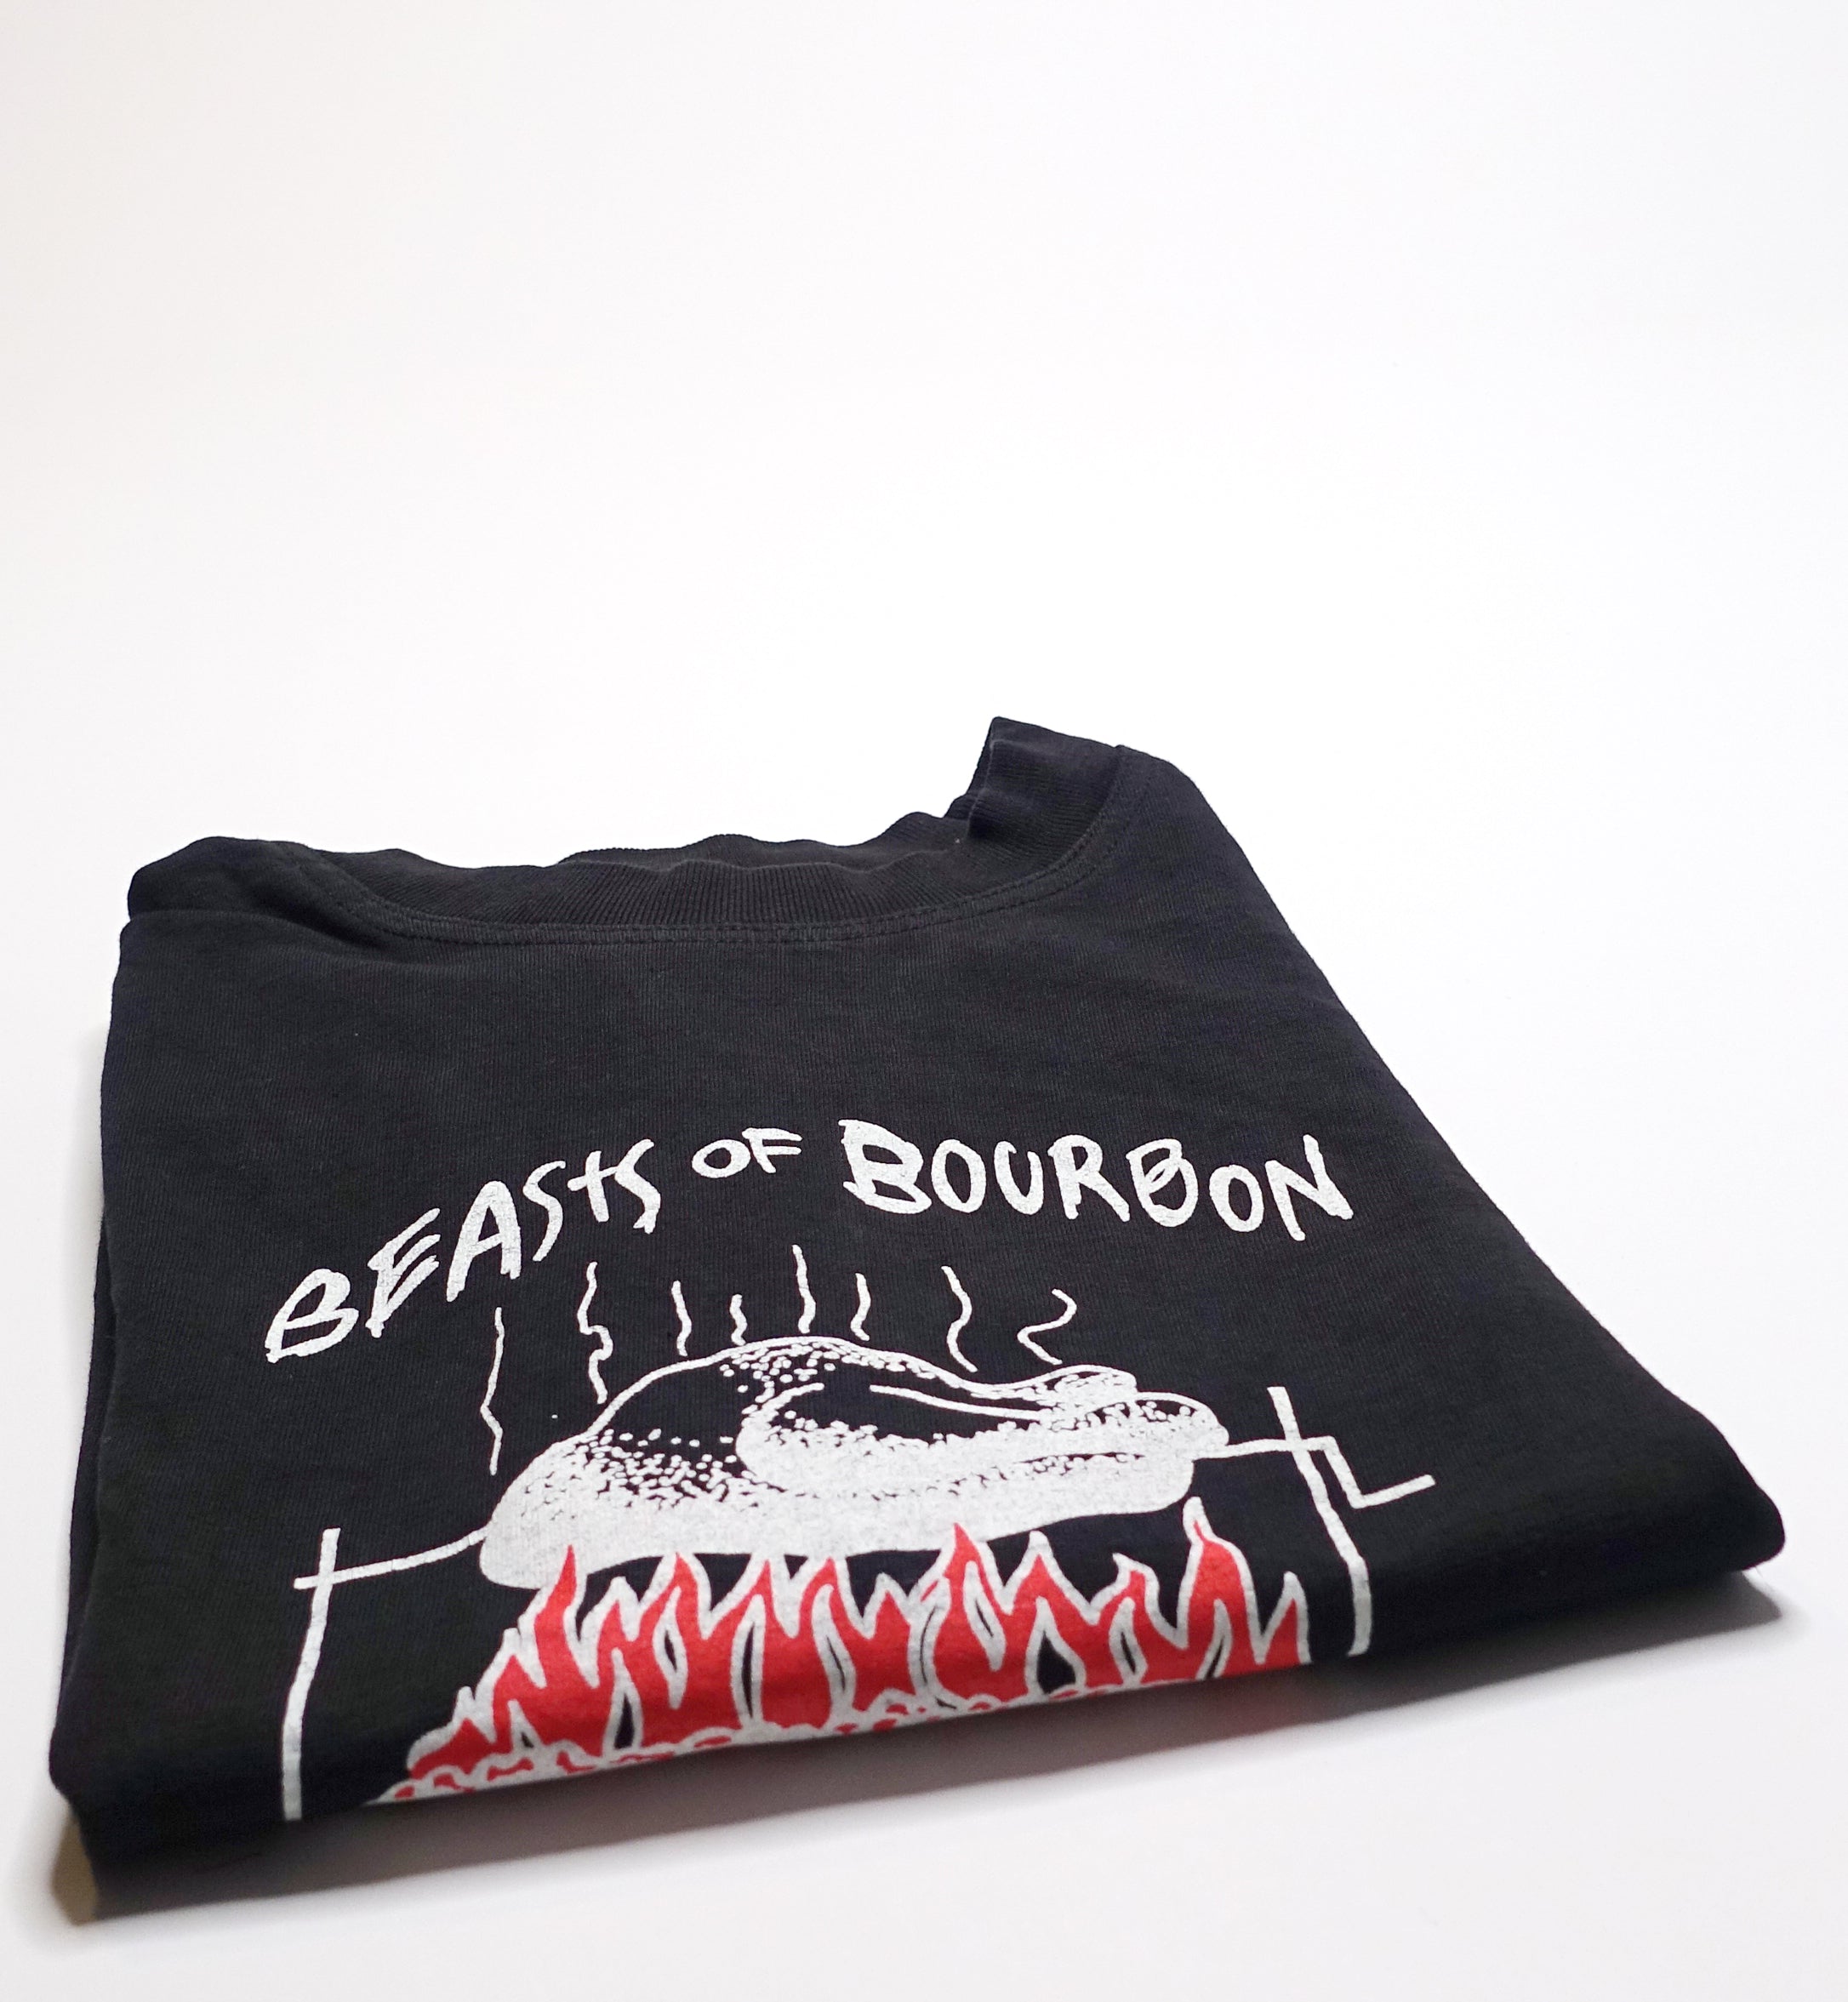 Beasts Of Burbon – Gone 1997 Tour Shirt Size Large